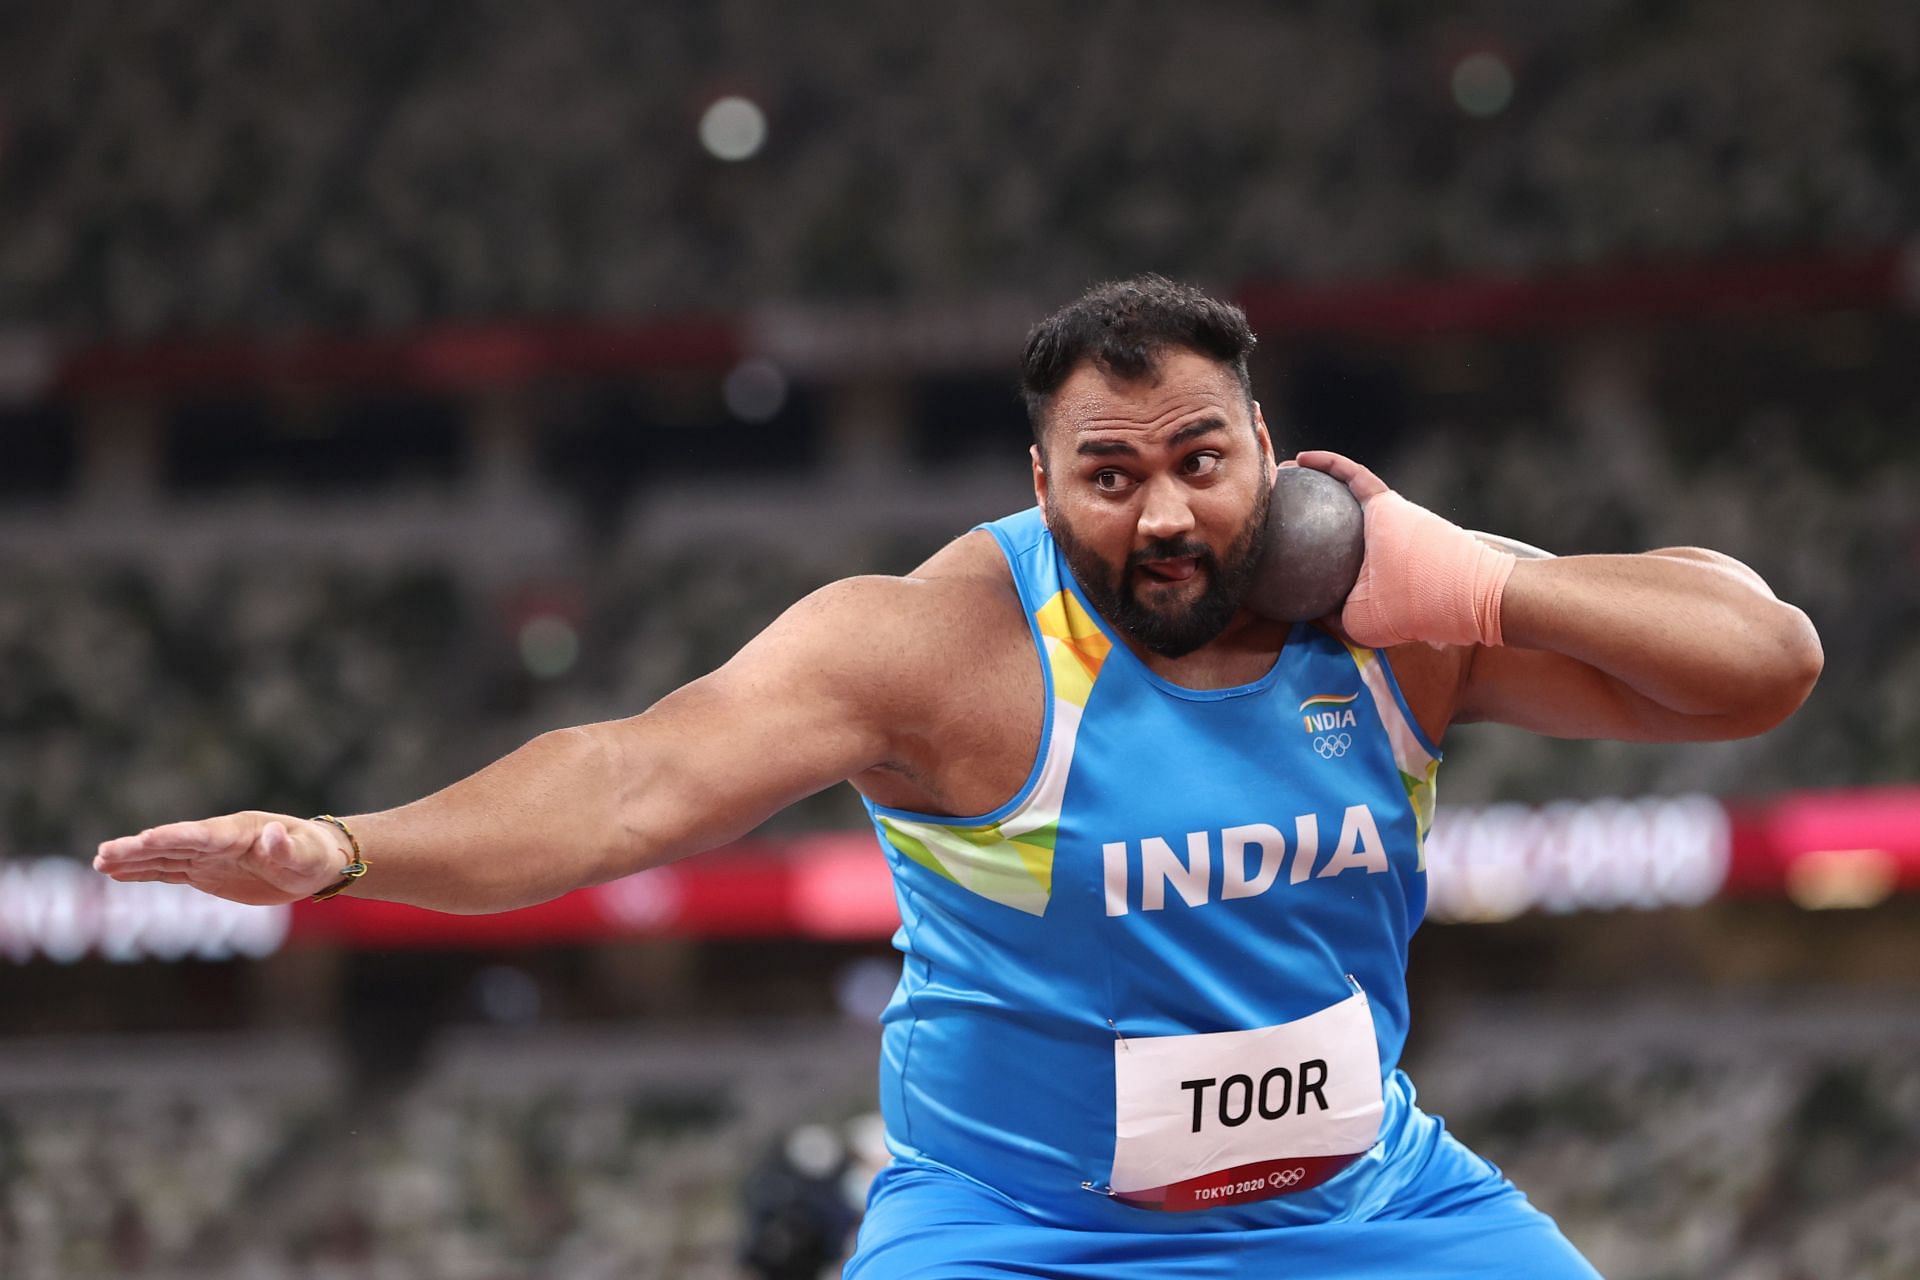 Tajinder Singh Toor in action during the 2020 Tokyo Olympics 